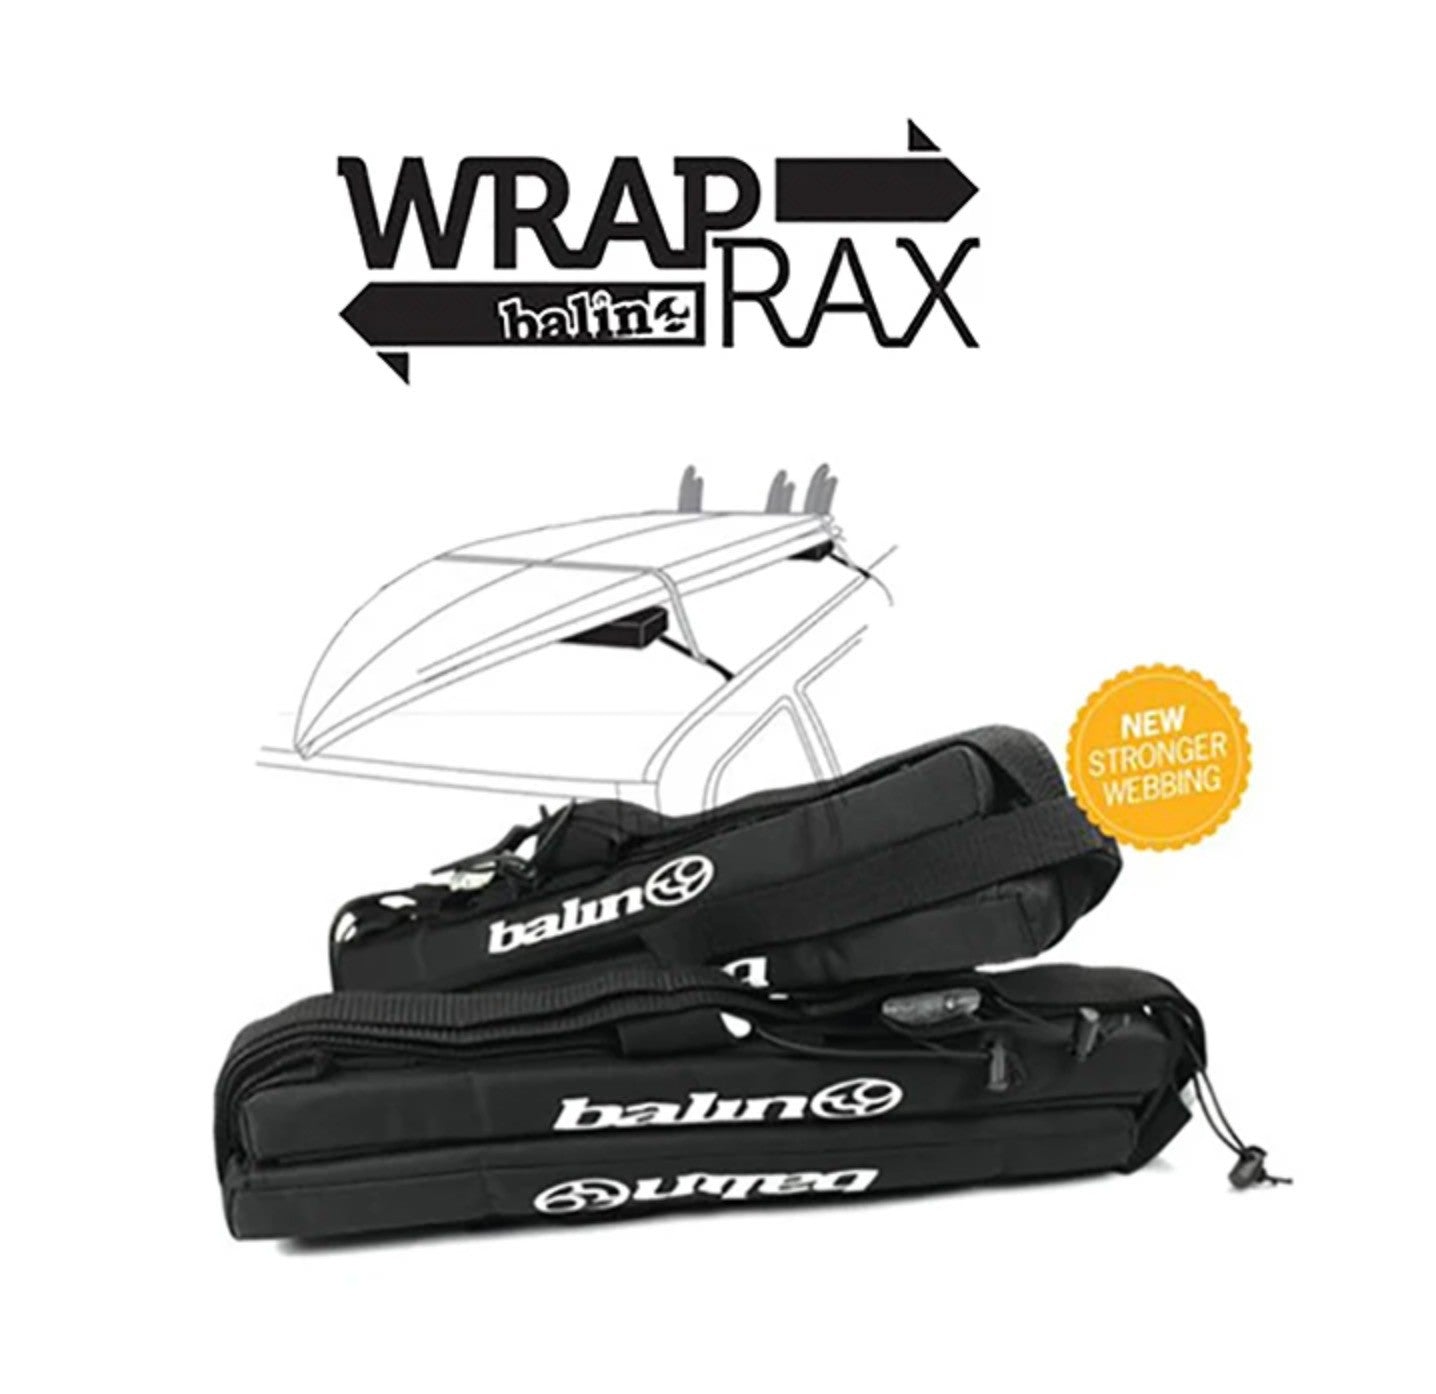 BALIN - Roof Racks - Wrap Rax Single for Surf and Longboards (1-3 boards)